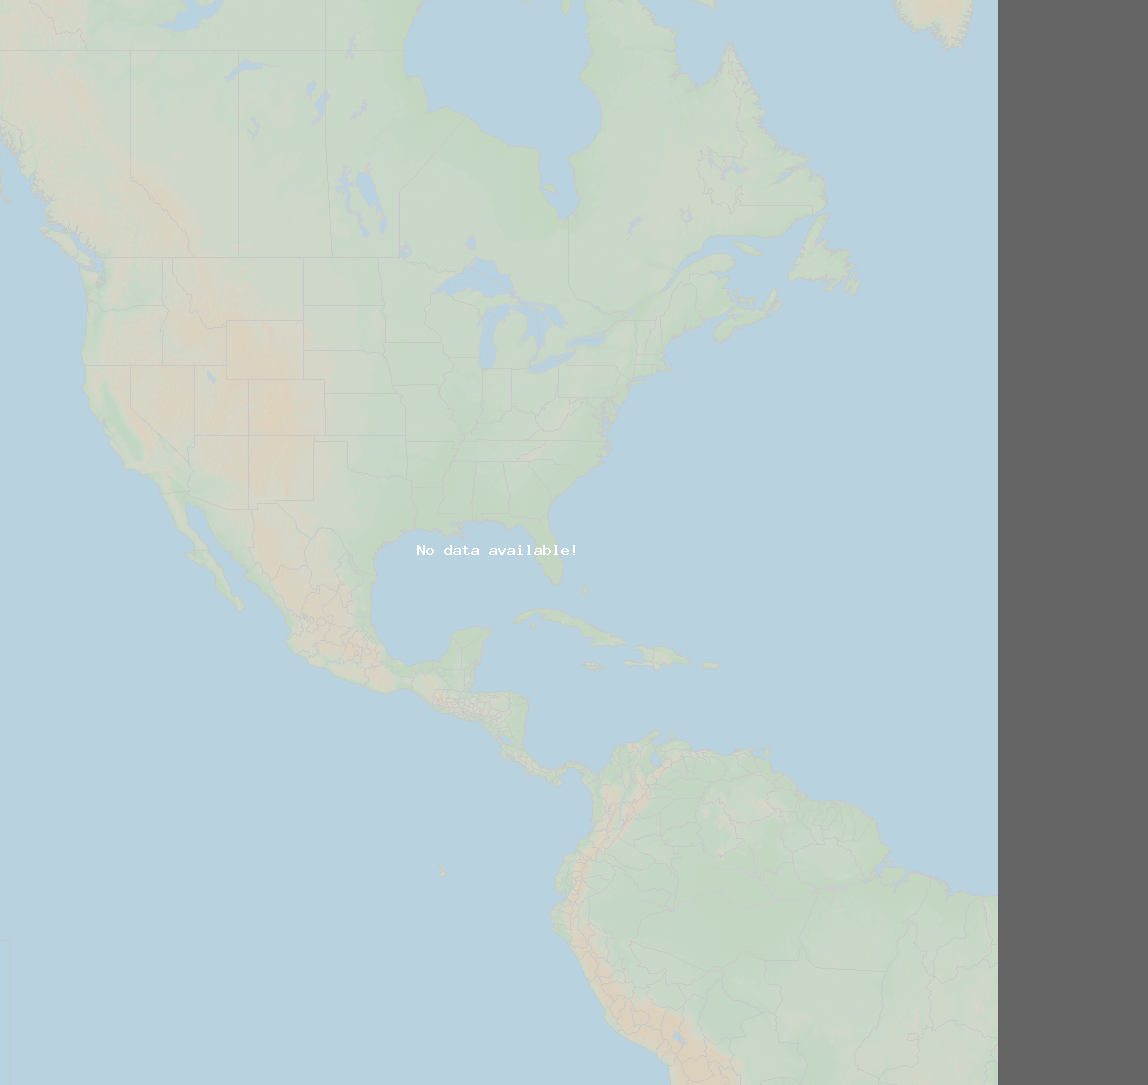 Andel blixtar (Station Frankfort RxF) North America 2022 